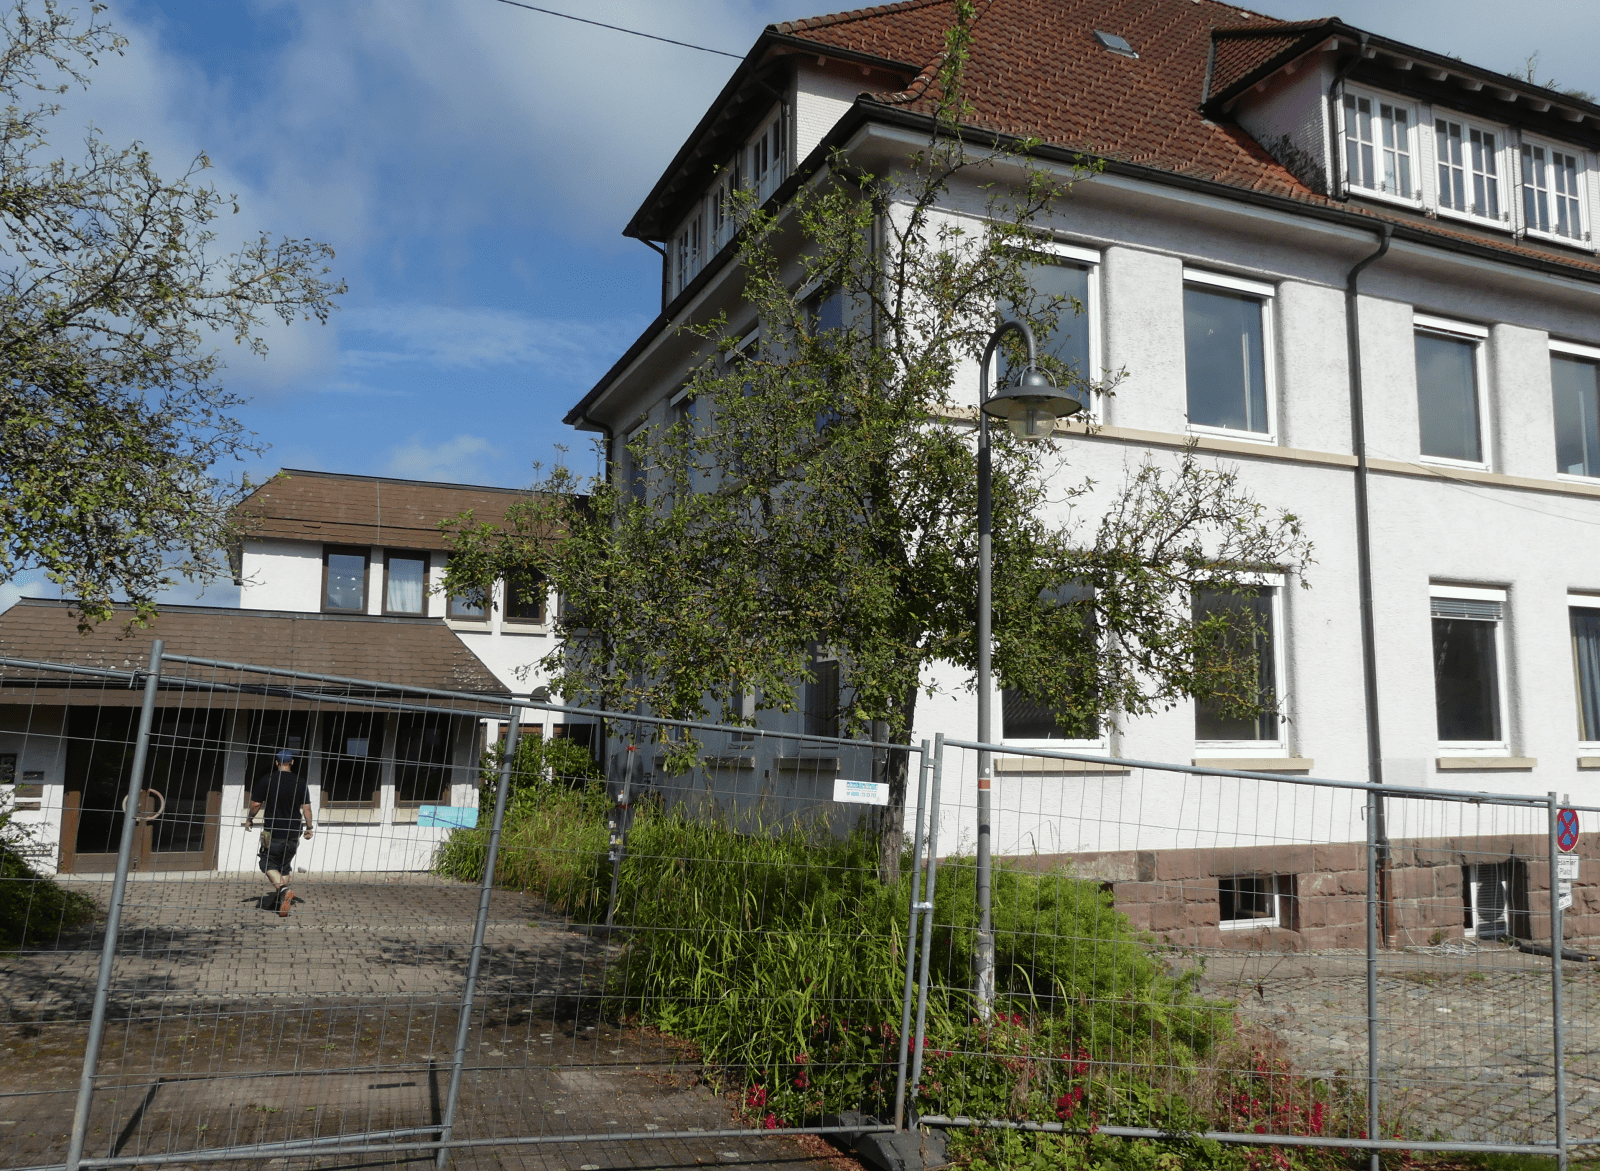 kirchplatzschule umbau startdk 020824 (19)